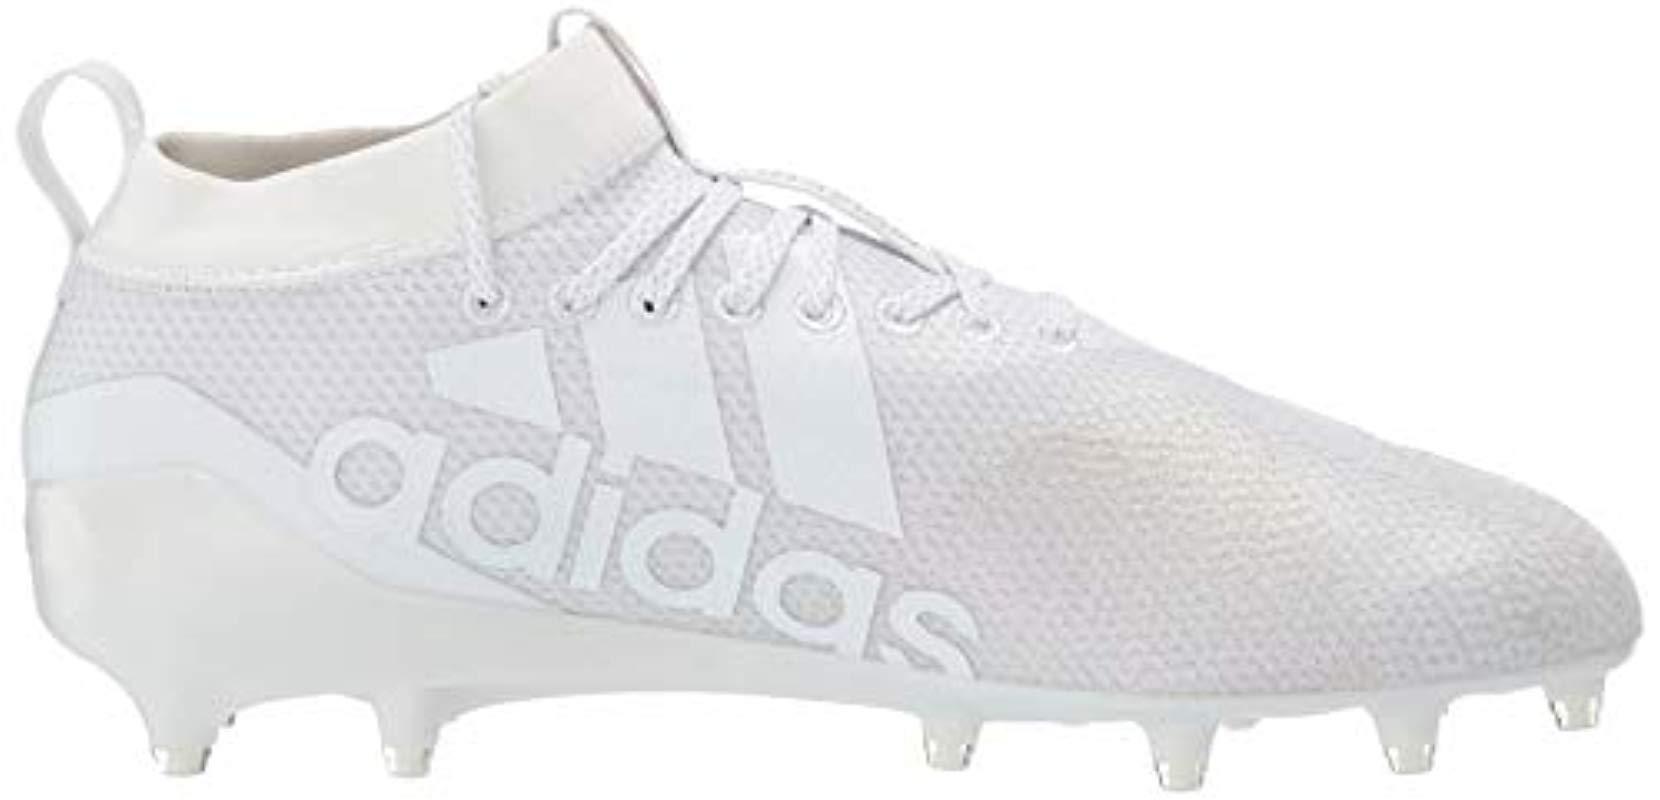 adidas Adizero 8.0 Football Shoe in White for Men - Lyst